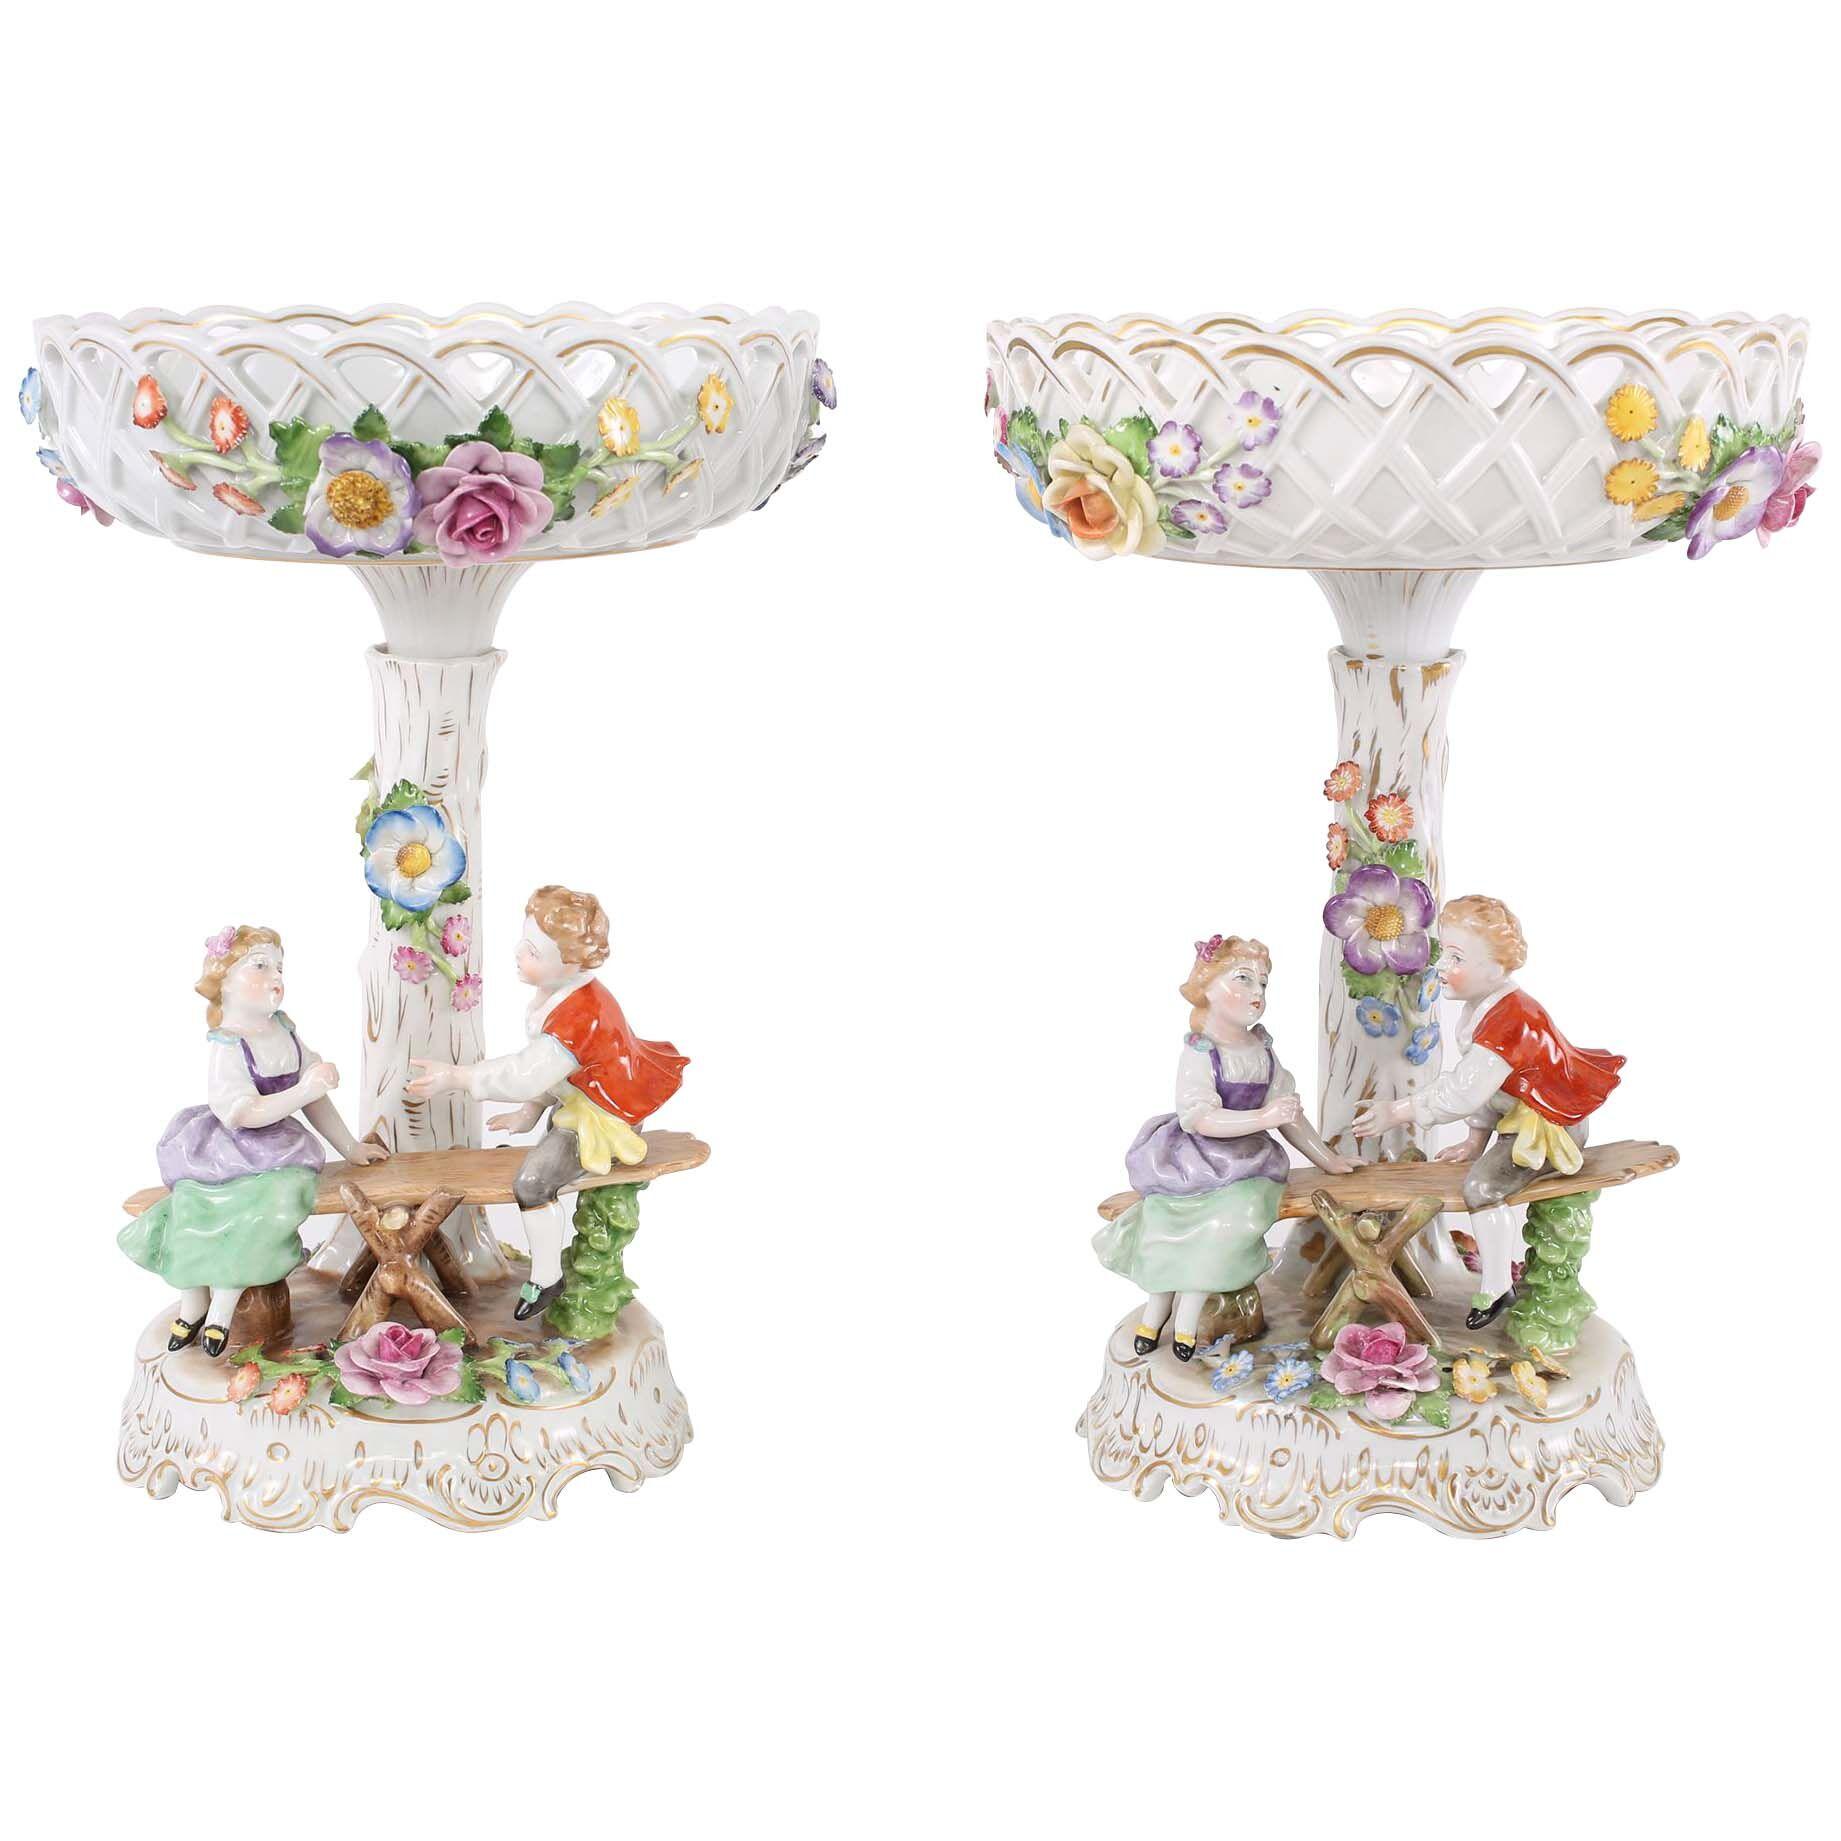 Early 20th Century German Porcelain Decorative Pieces